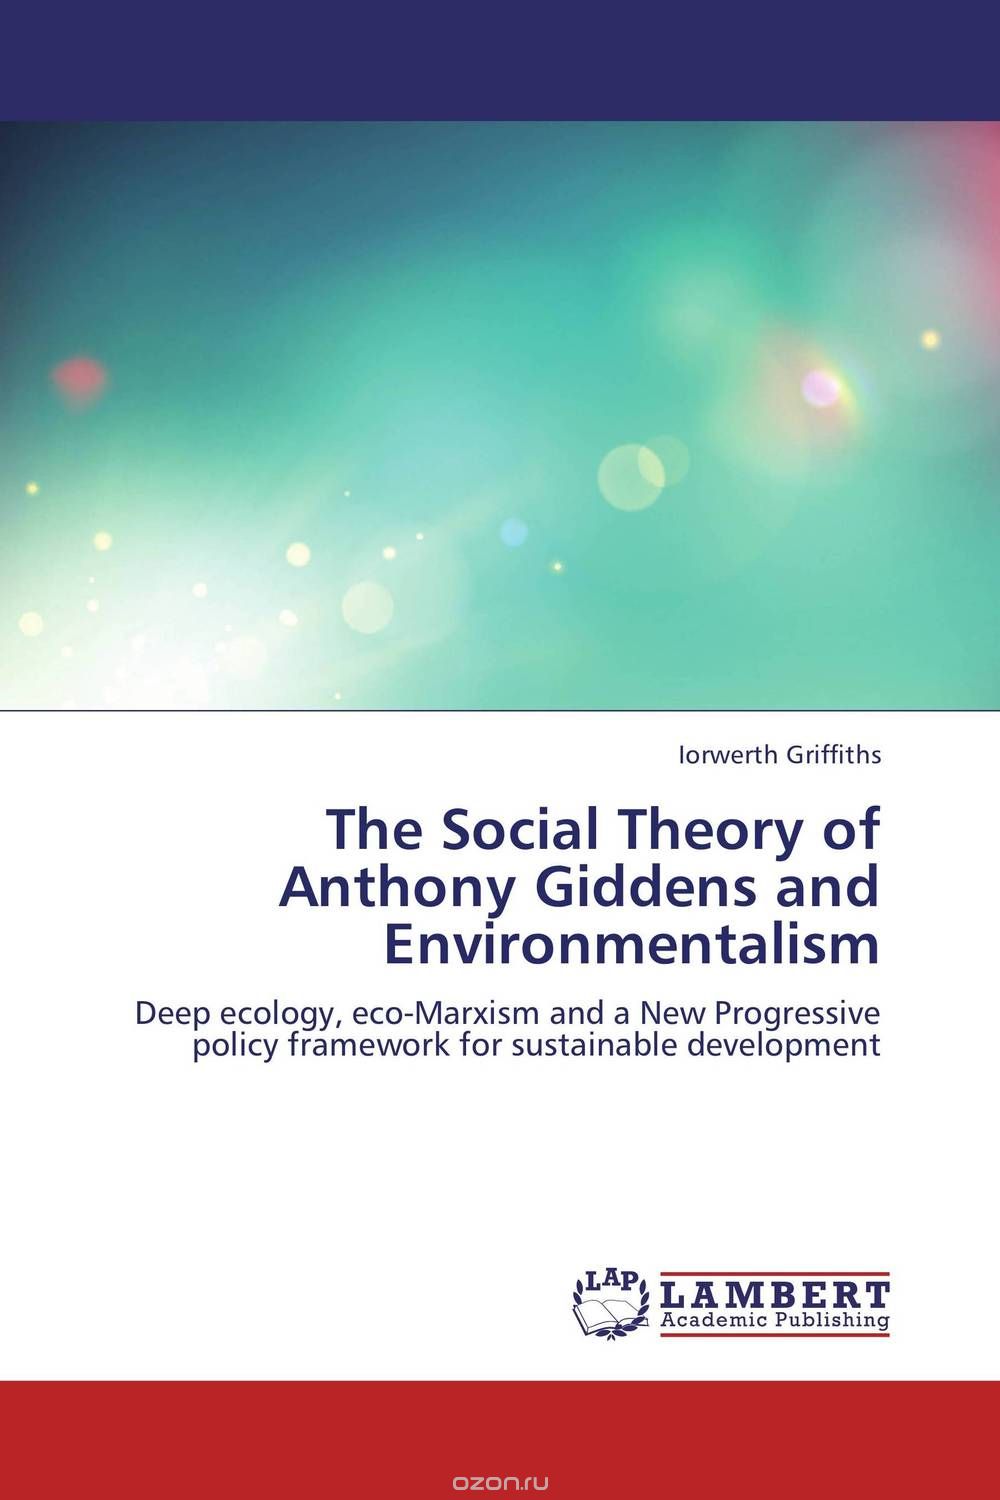 Скачать книгу "The Social Theory of Anthony Giddens and Environmentalism"